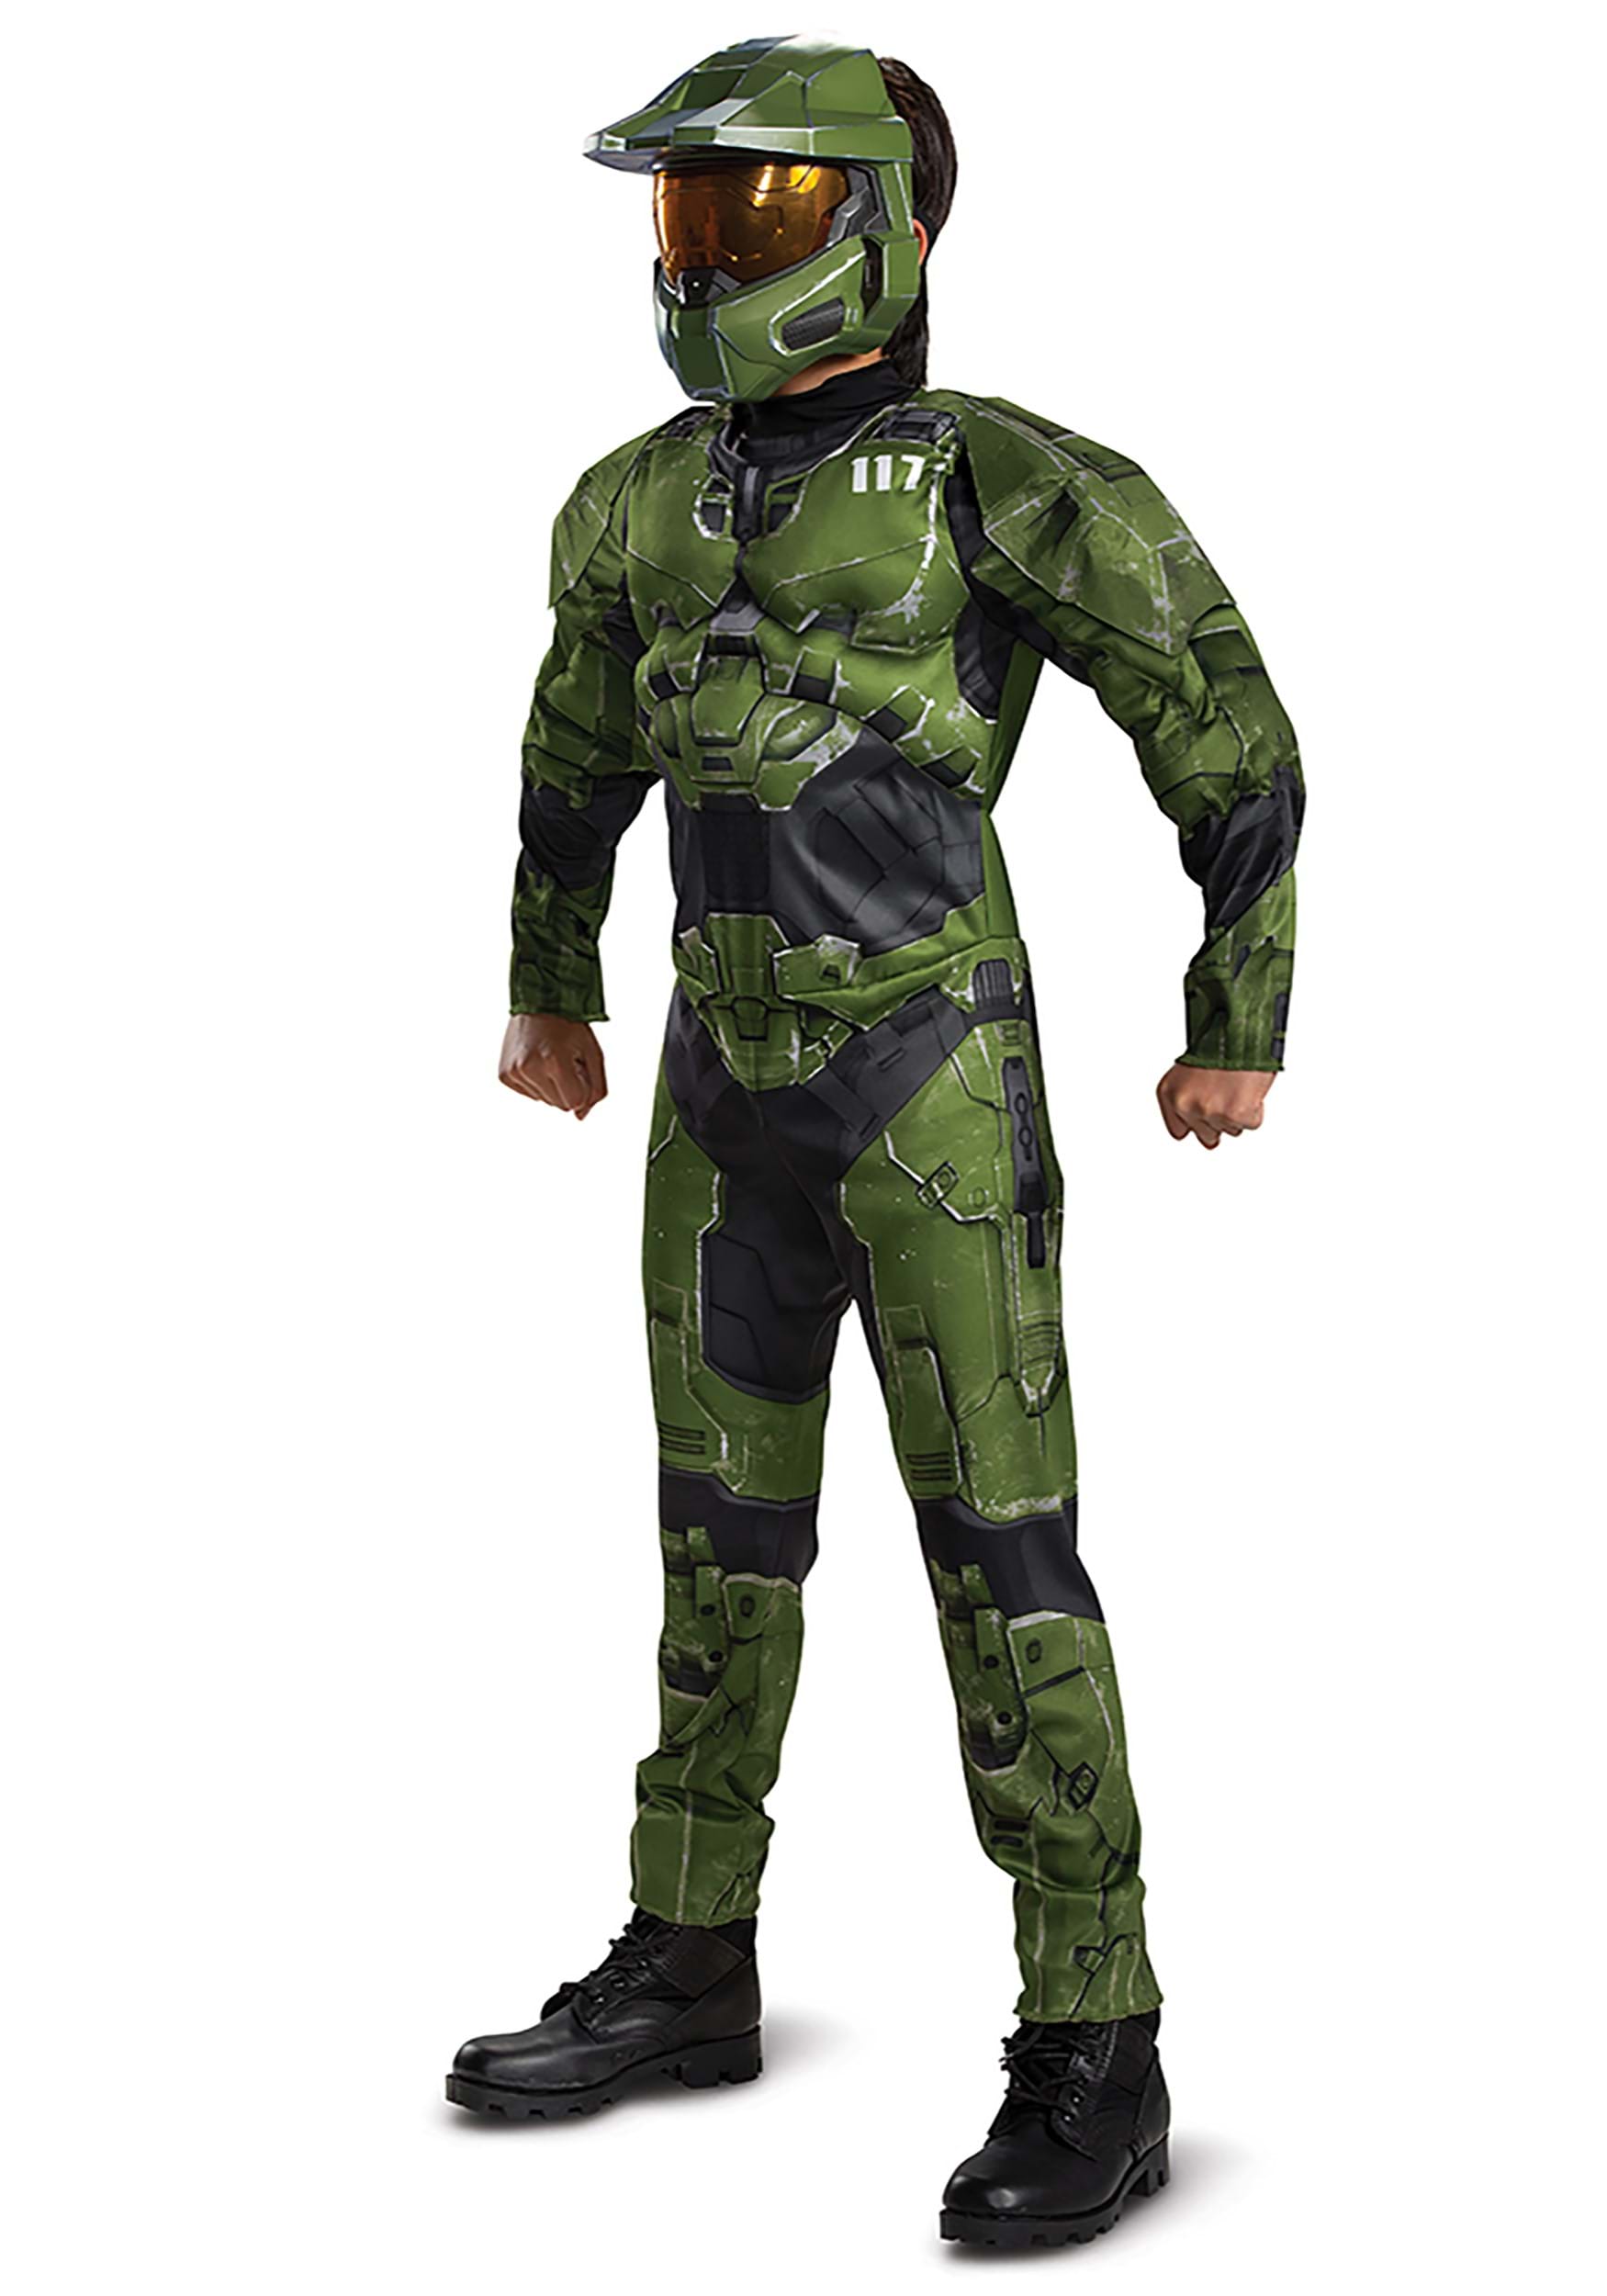 Kid's Halo Infinite Master Chief Muscle Costume